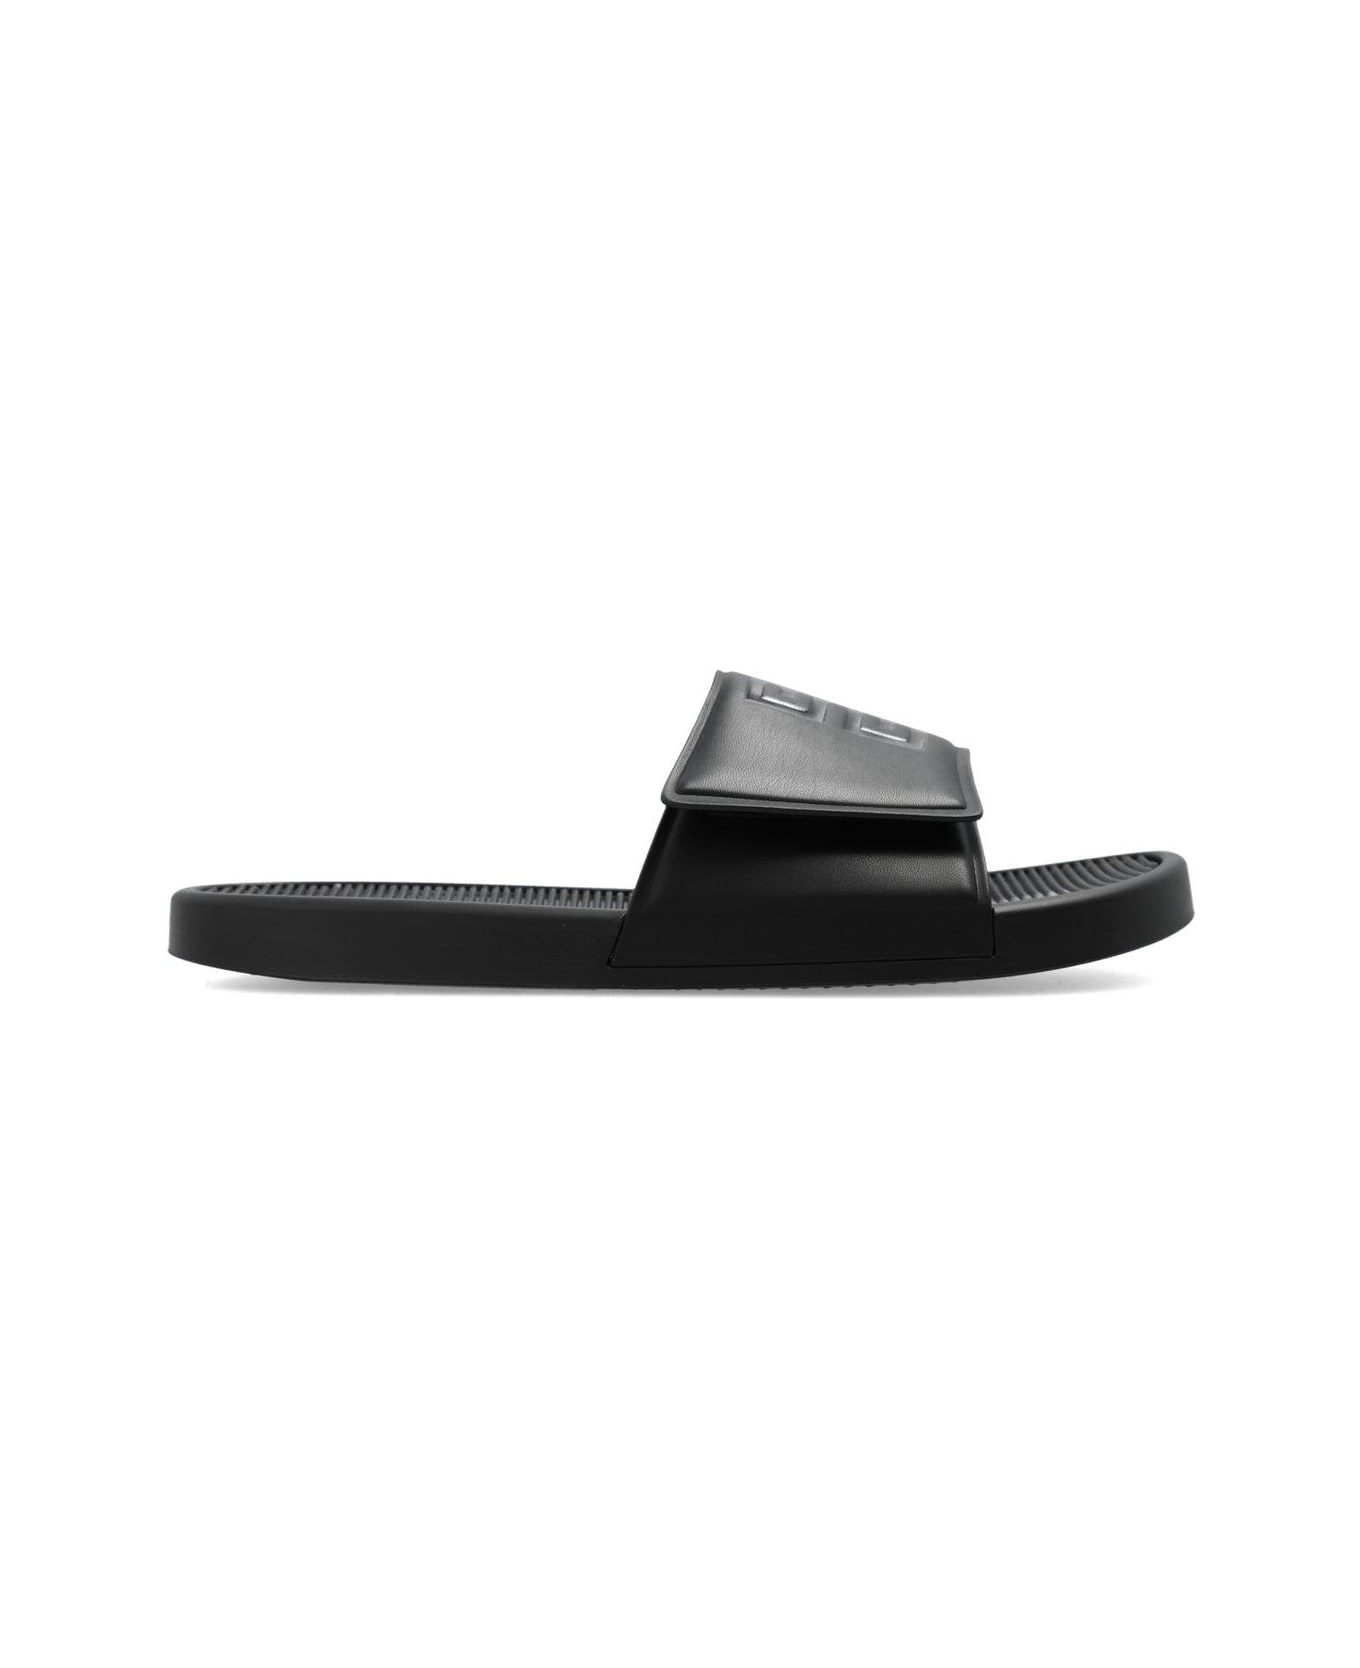 Givenchy 4g Emblem Flat Sandals - White/Black その他各種シューズ